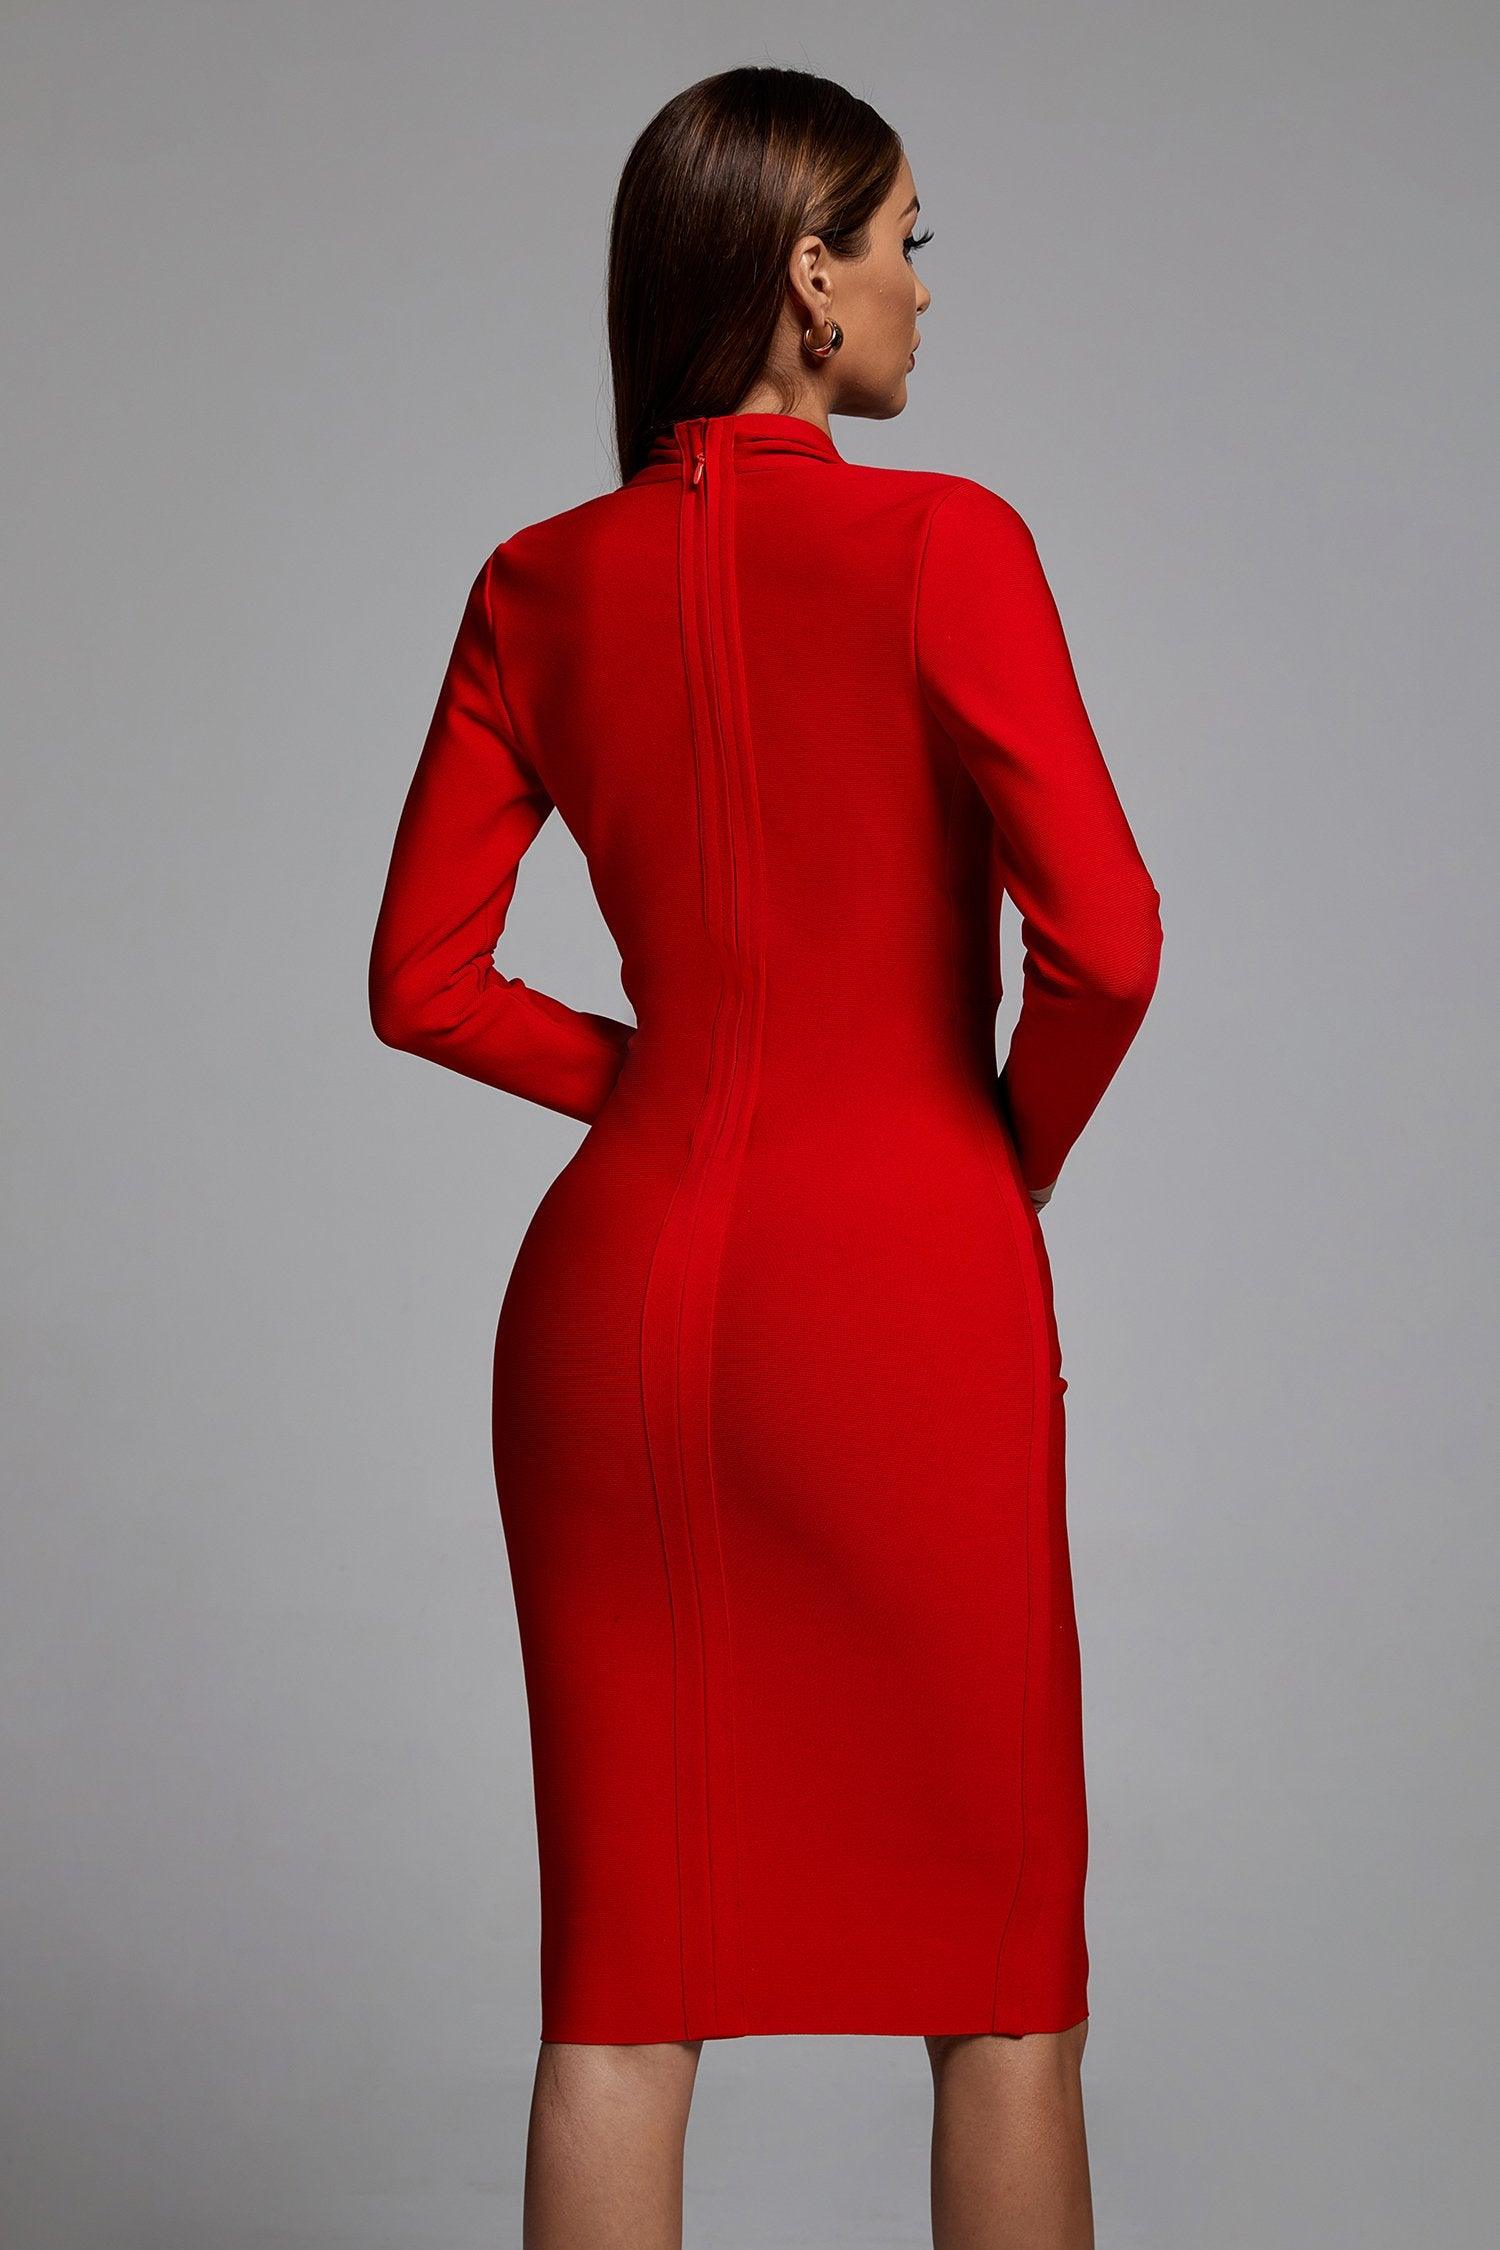 Persephone Bandage Dress - Red - Bellabarnett